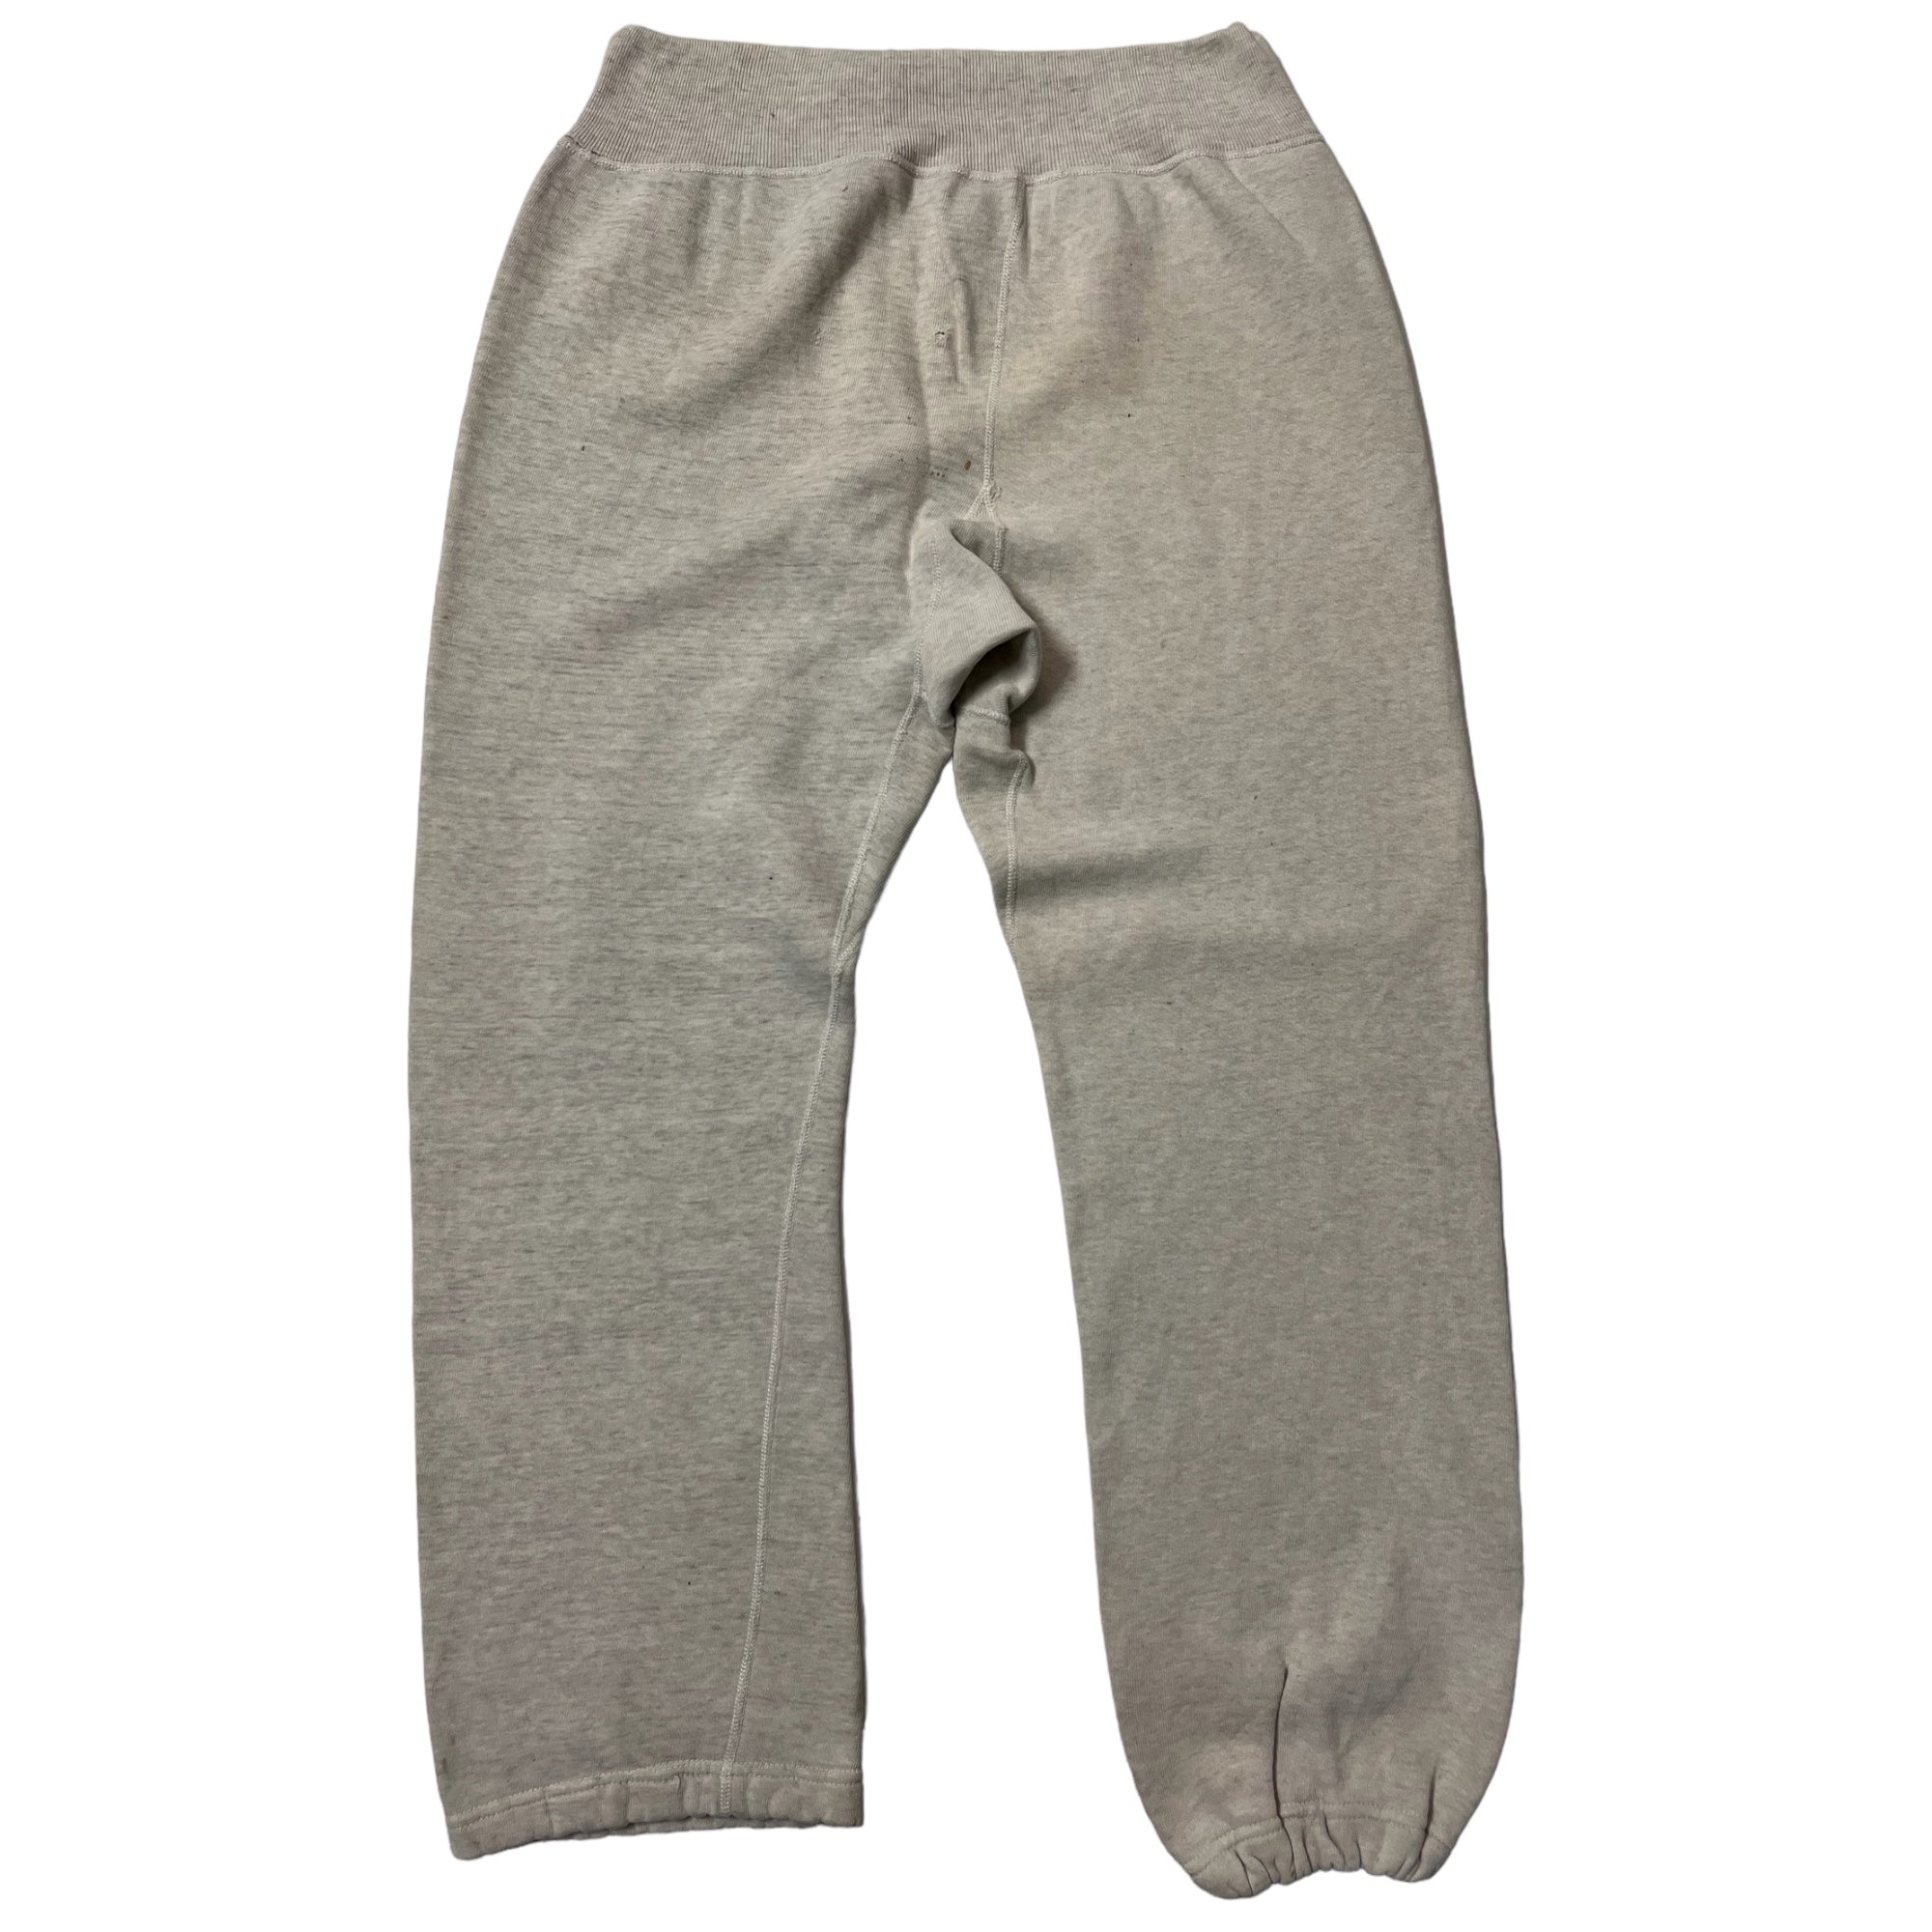 1960s Prisoner Sweatpants ‘Correctional Health Services’ - Light Heather Grey - Adjustable/34x29